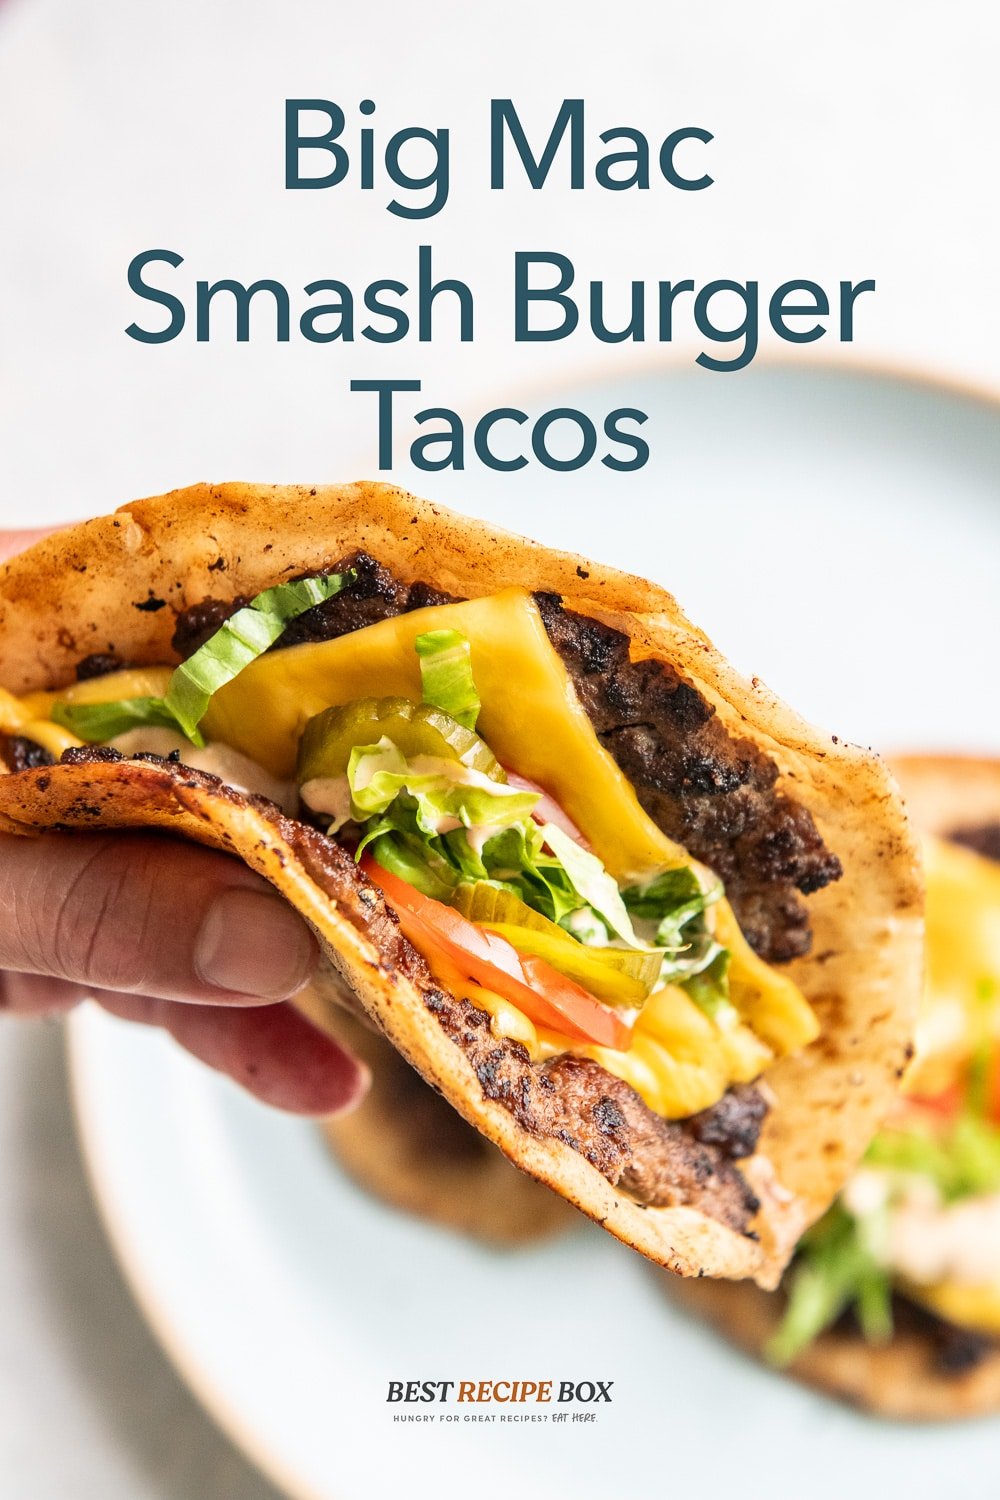 Smash Burger Taco Recipe